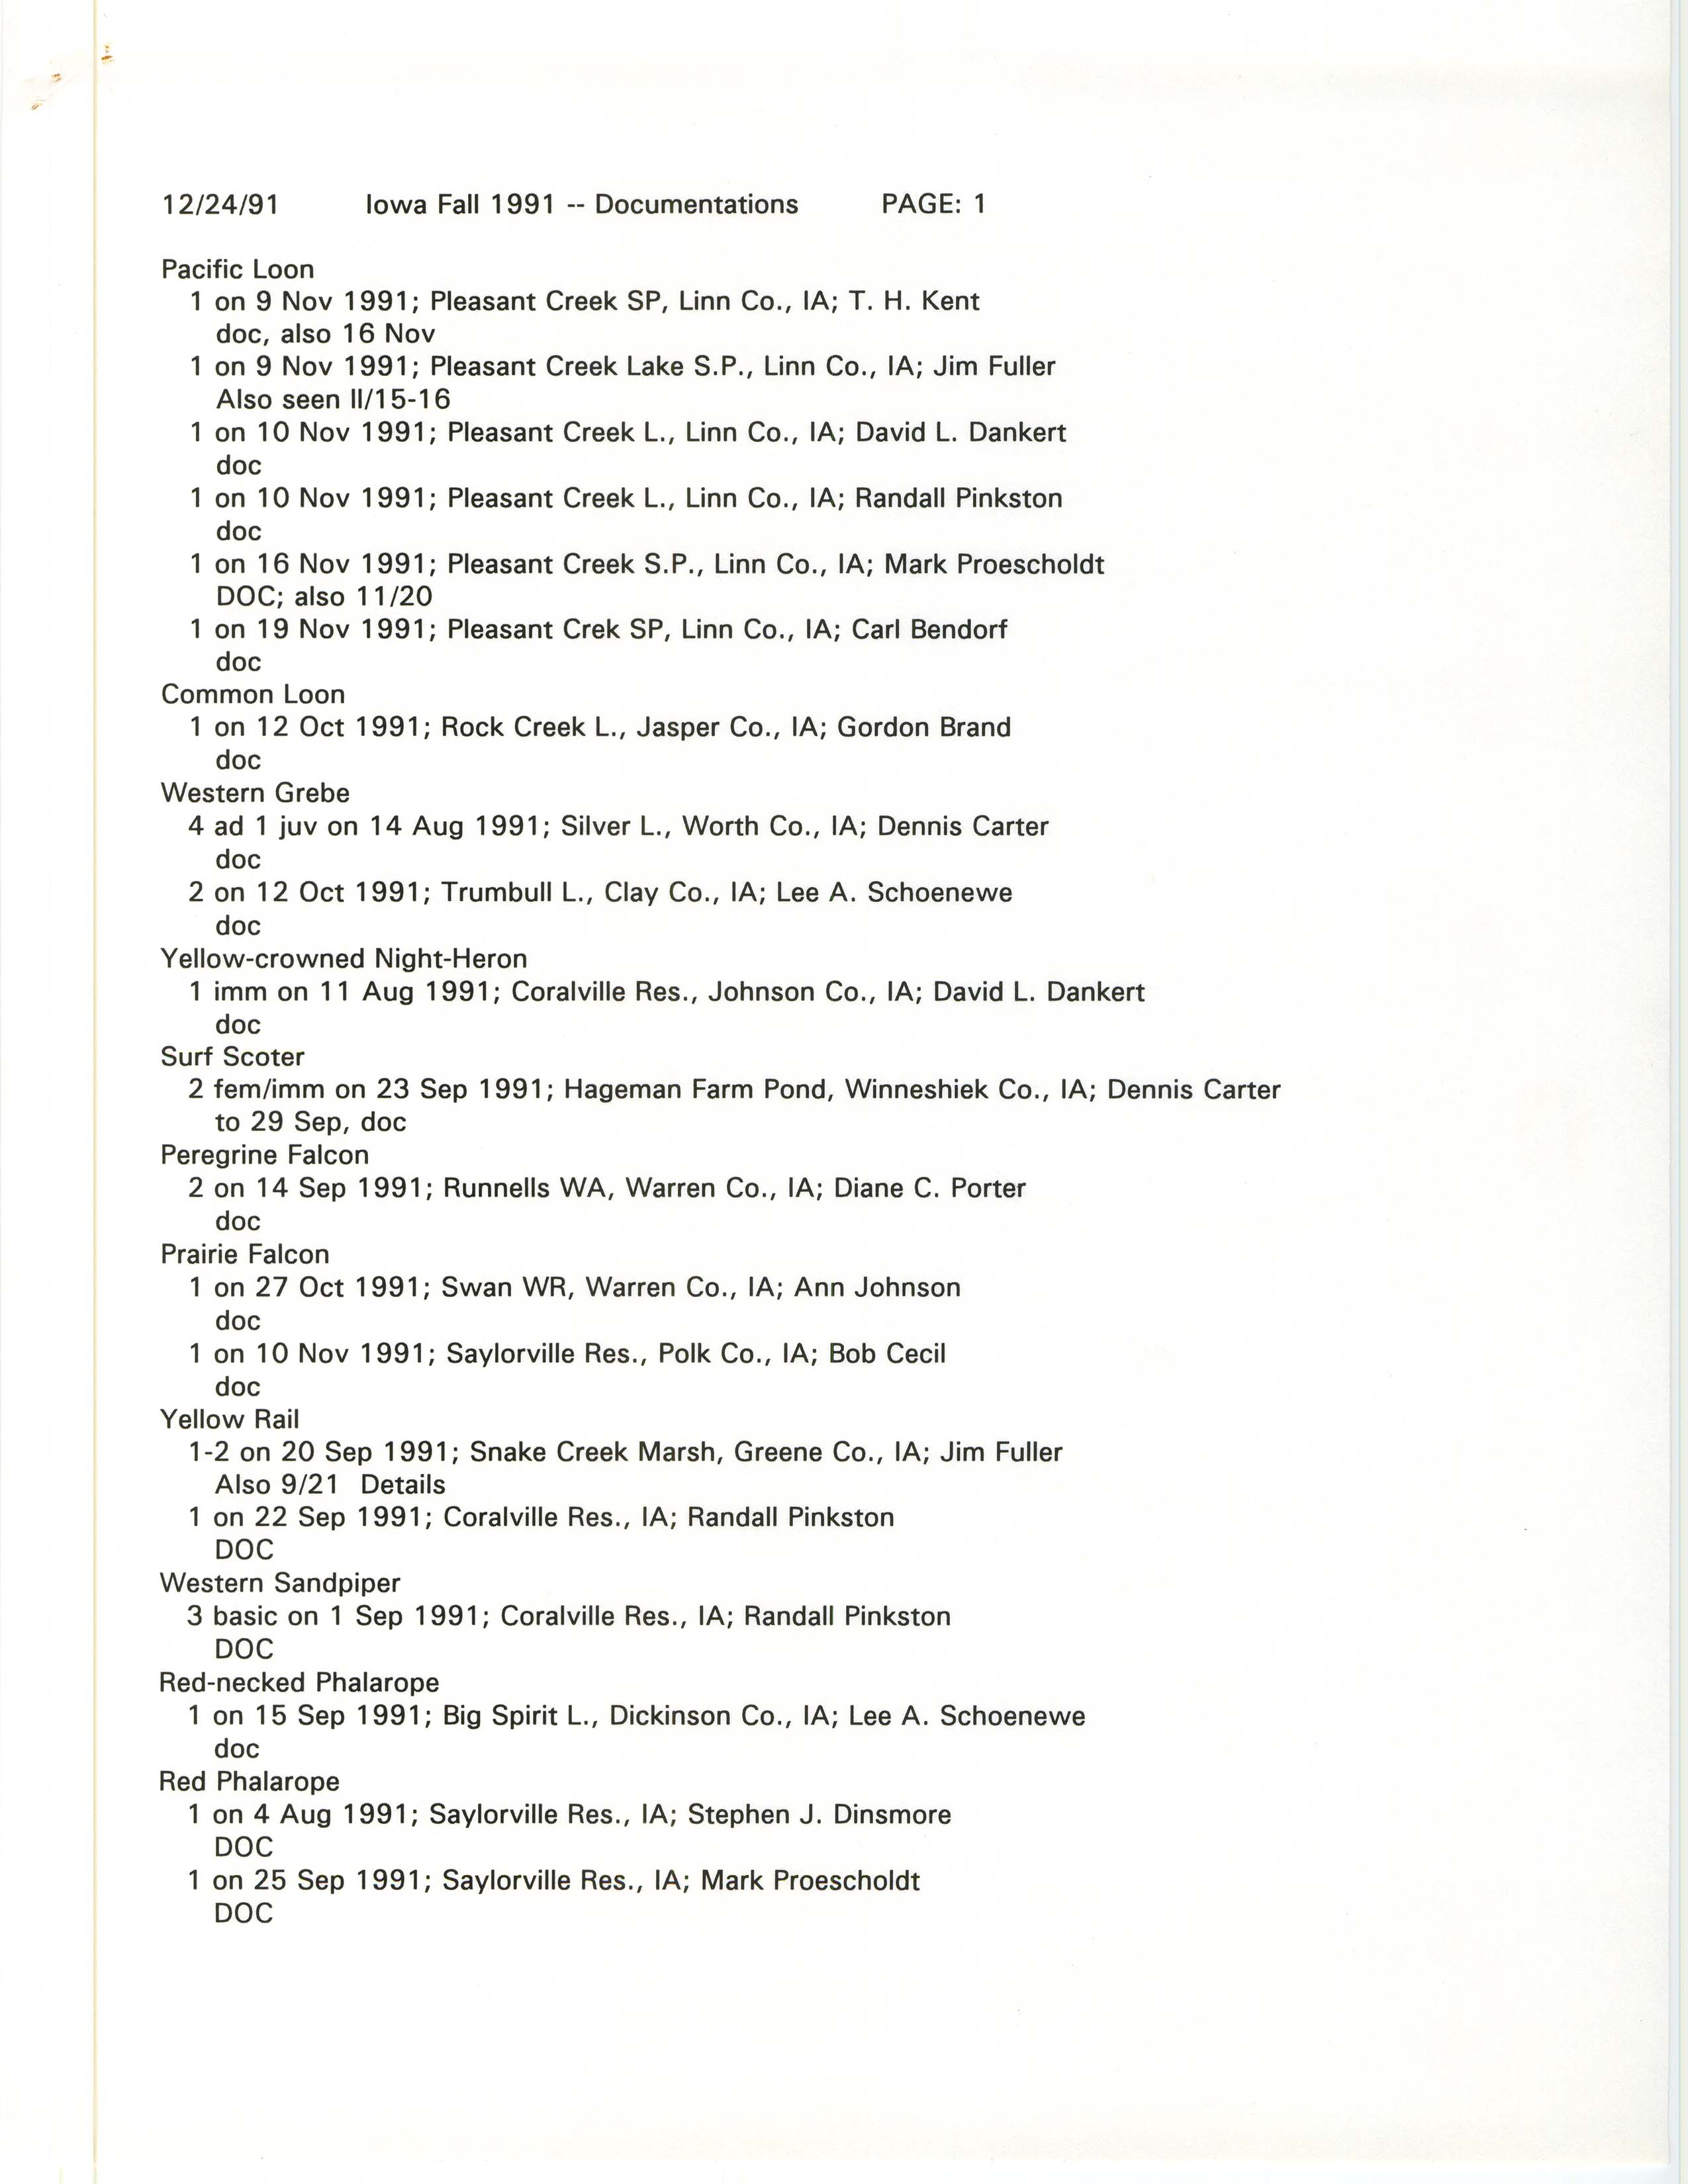 Iowa fall 1991 documentations, December 24, 1991